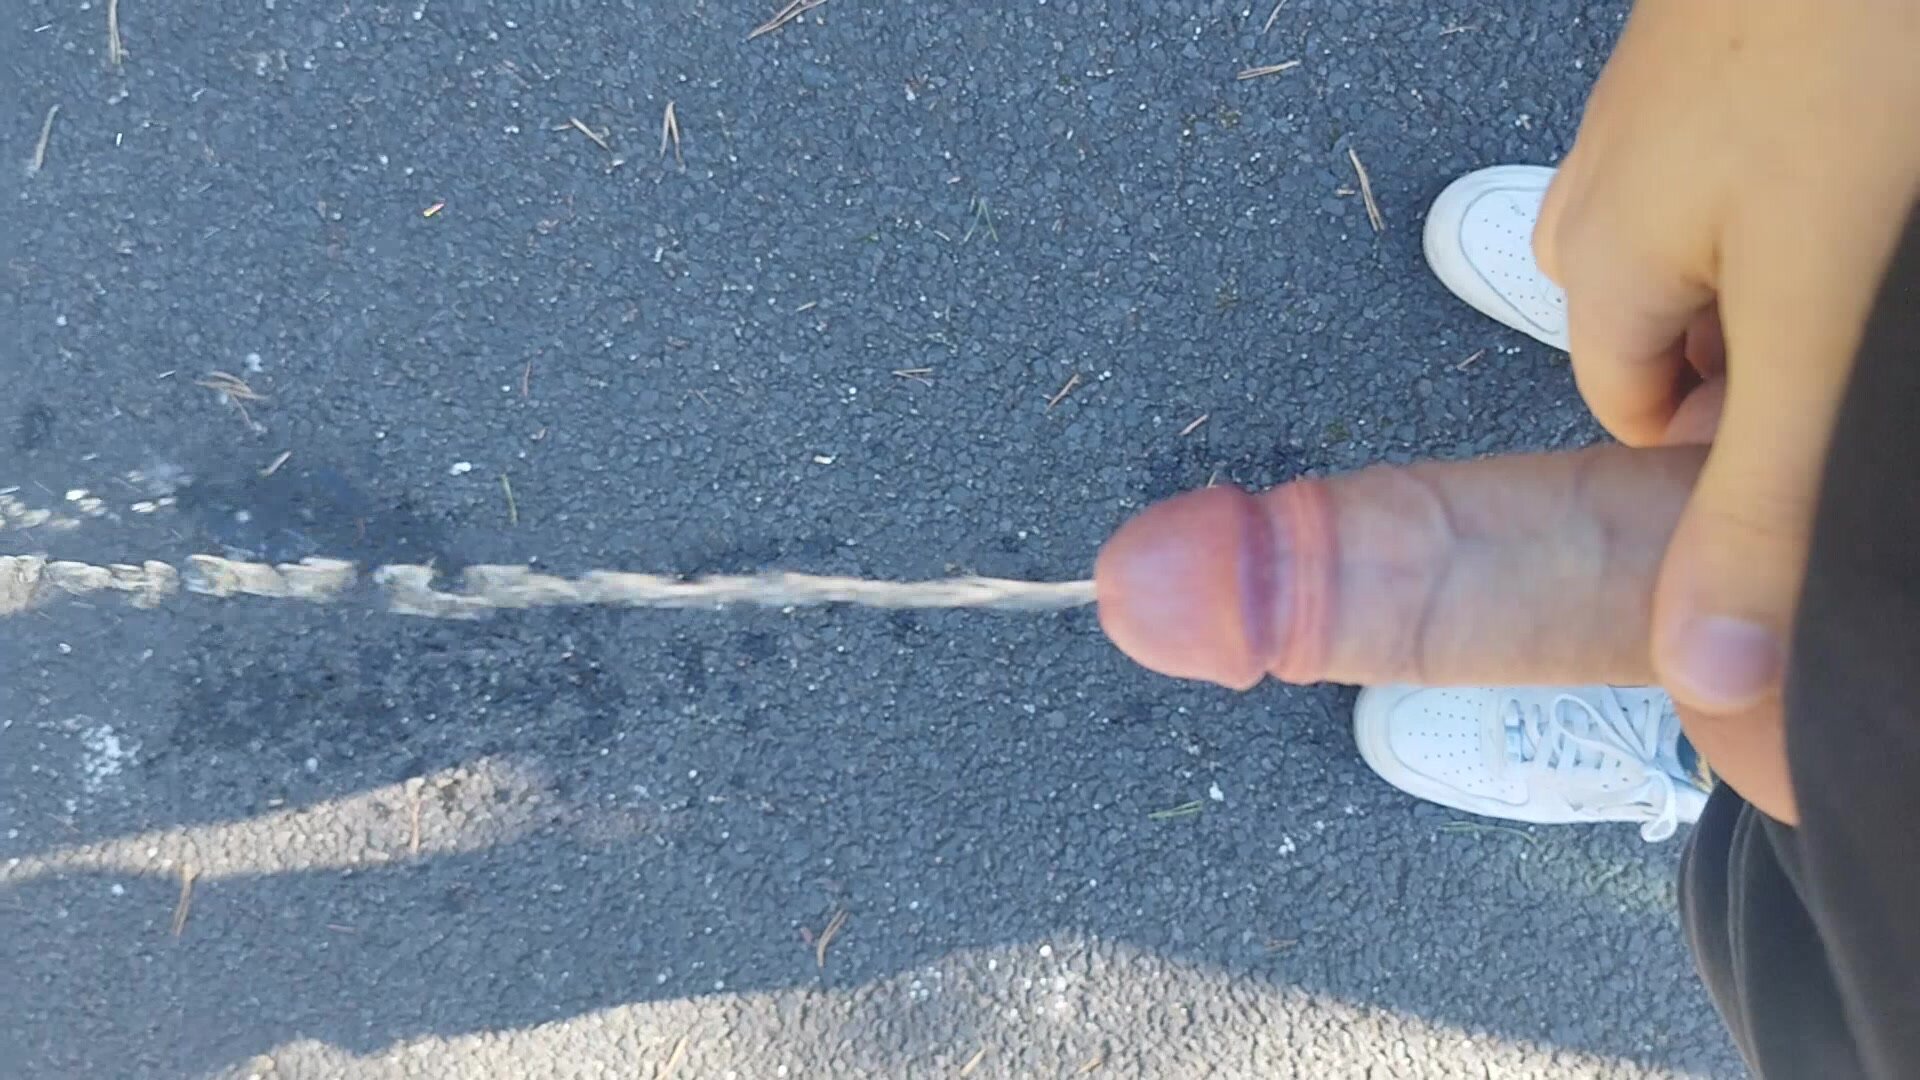 Pissing on the roadside